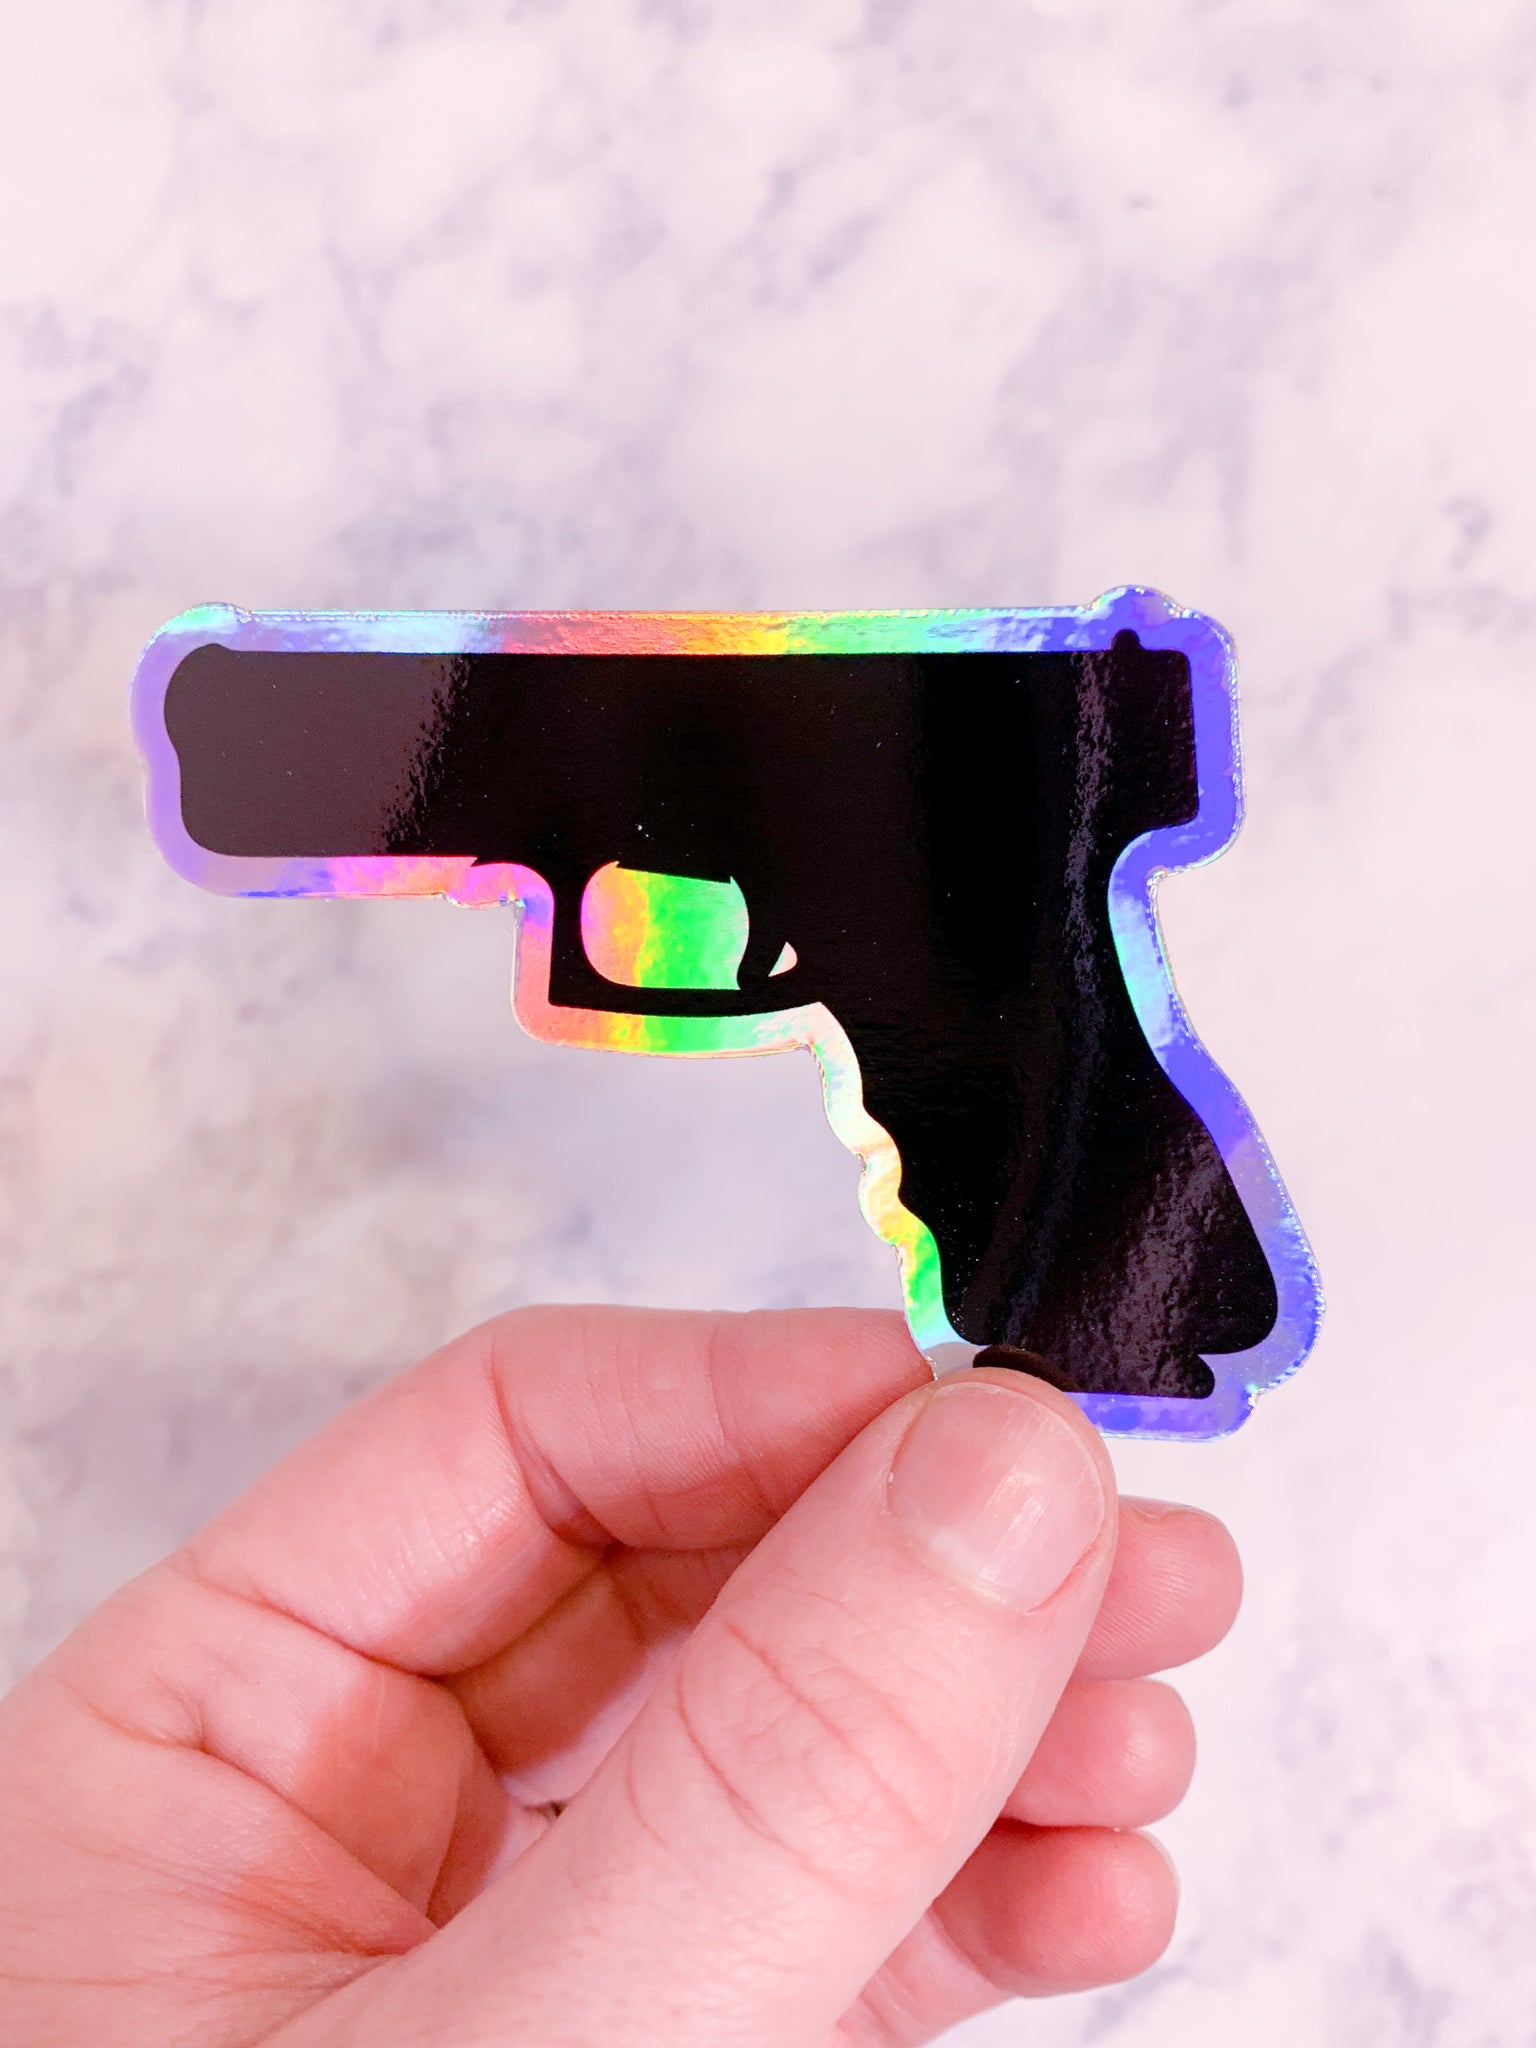 Holographic Pistol Sticker